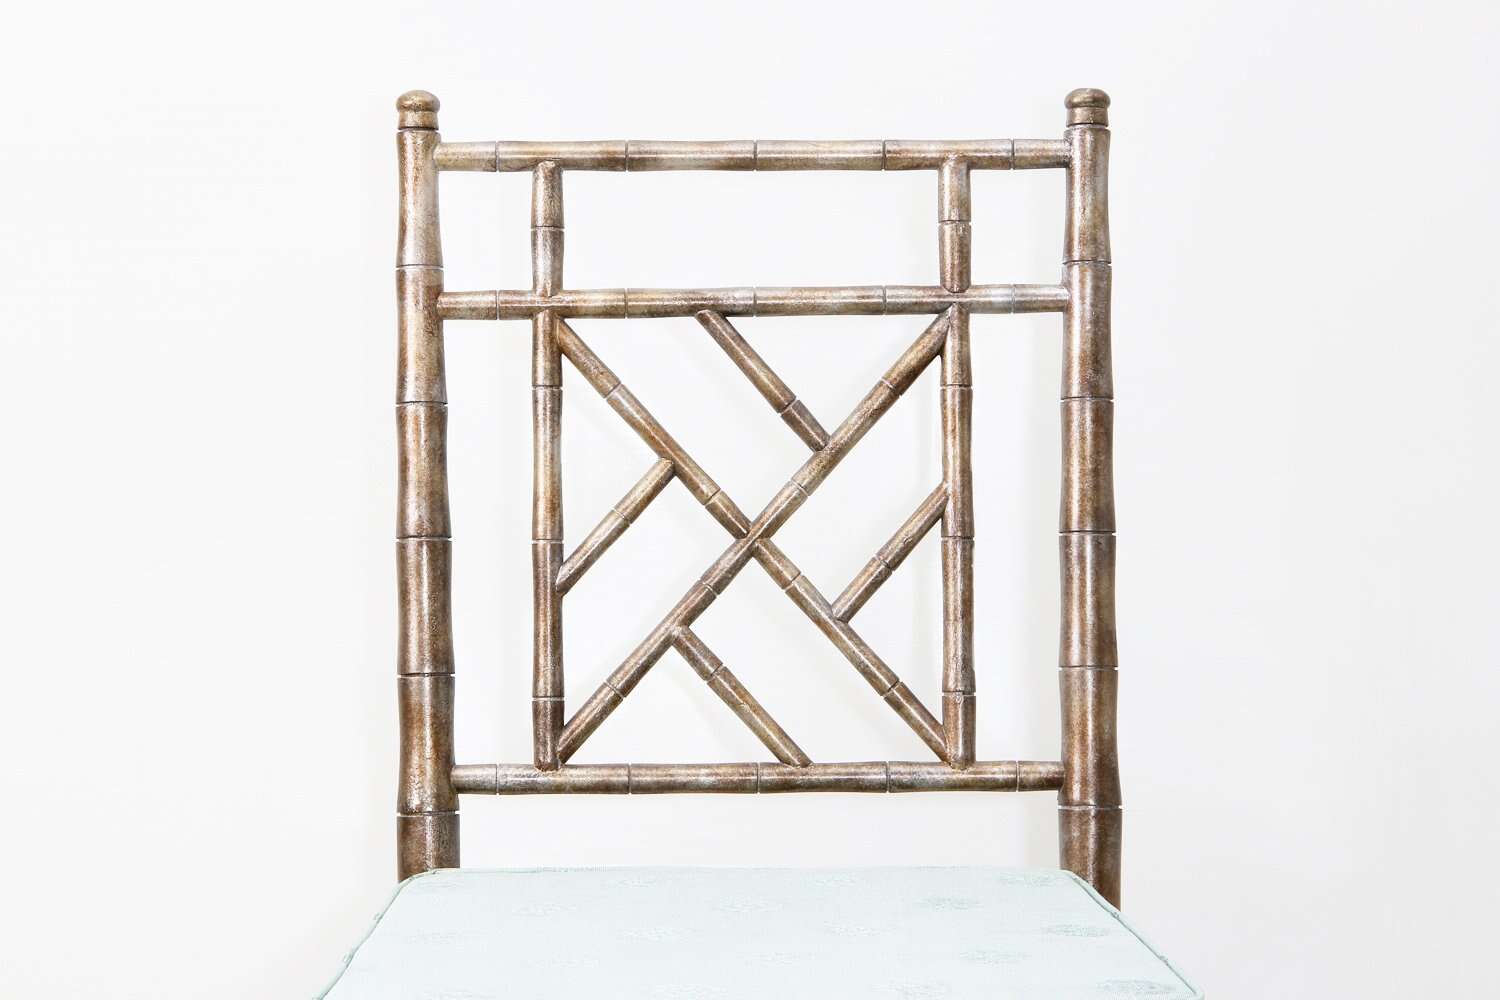  https://forwooddesign.com/app/uploads/2019/07/Dining-chair–antique-bronze-4.jpg